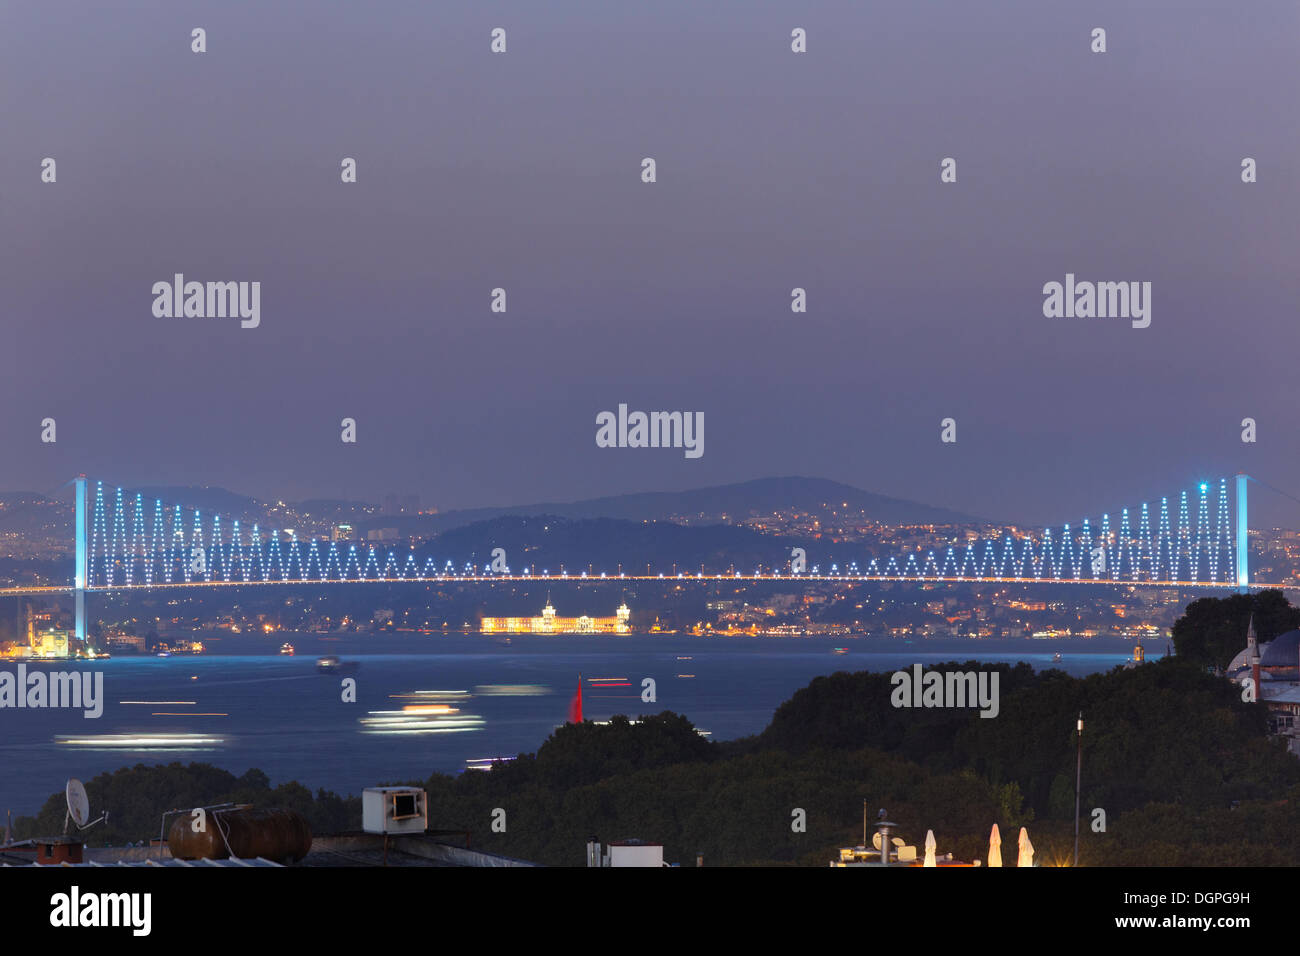 First Bosphorus Bridge, view from Old City Sultanahmet, Istanbul, Turkey, Europe Stock Photo